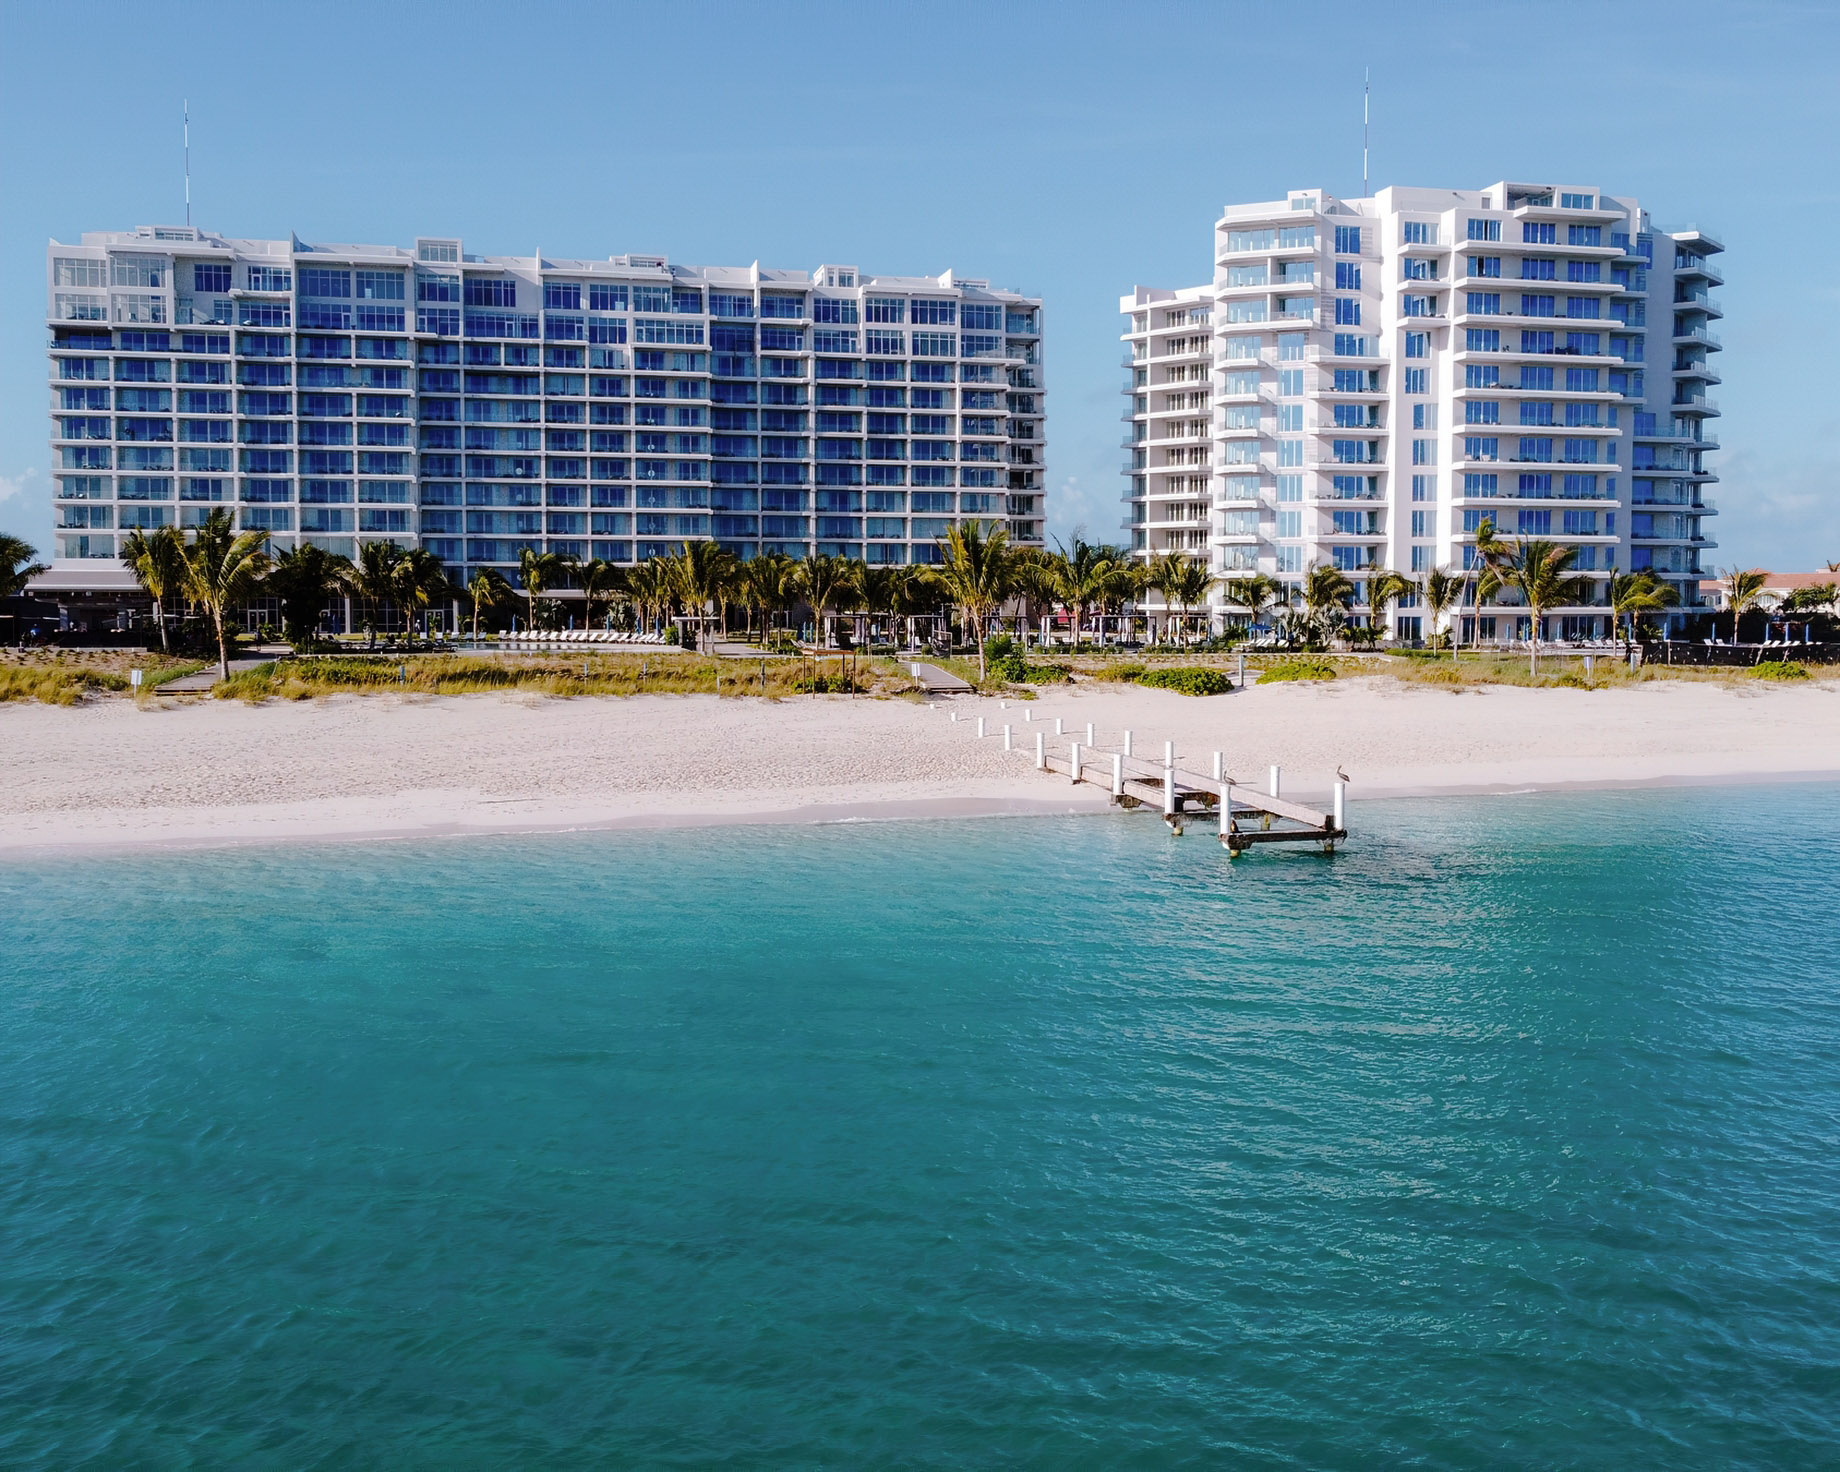 The Ritz-Carlton, Turks & Caicos Resort – Providenciales, Turks and Caicos Islands – Exterior Aerial Beach View